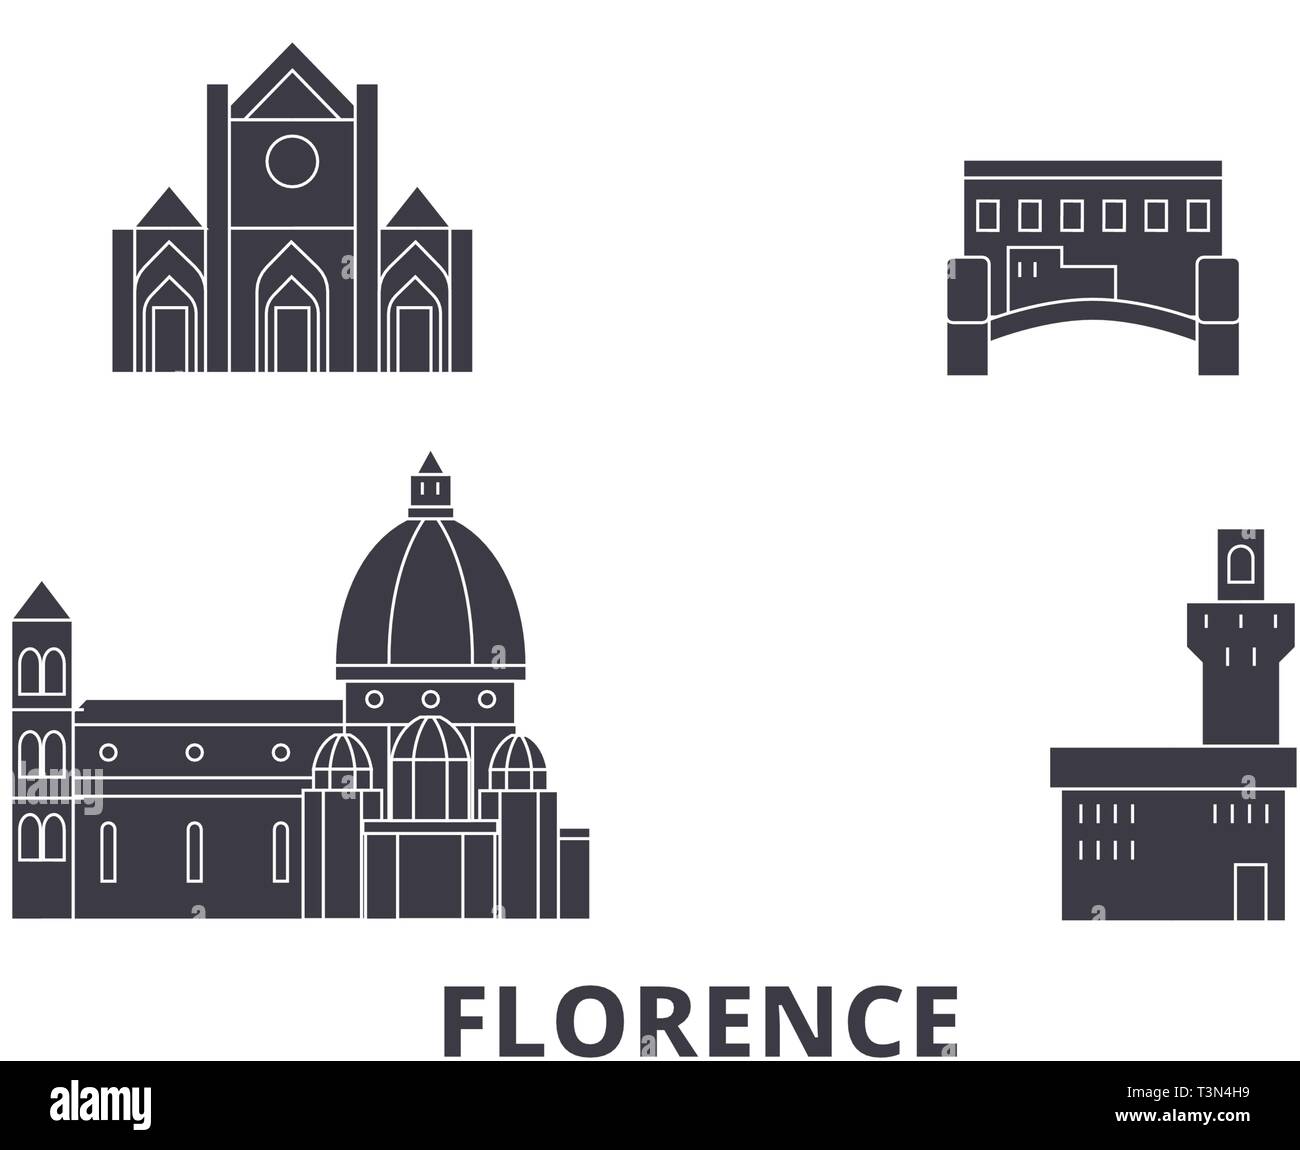 Italy, Florence City flat travel skyline set. Italy, Florence City black city vector illustration, symbol, travel sights, landmarks. Stock Vector